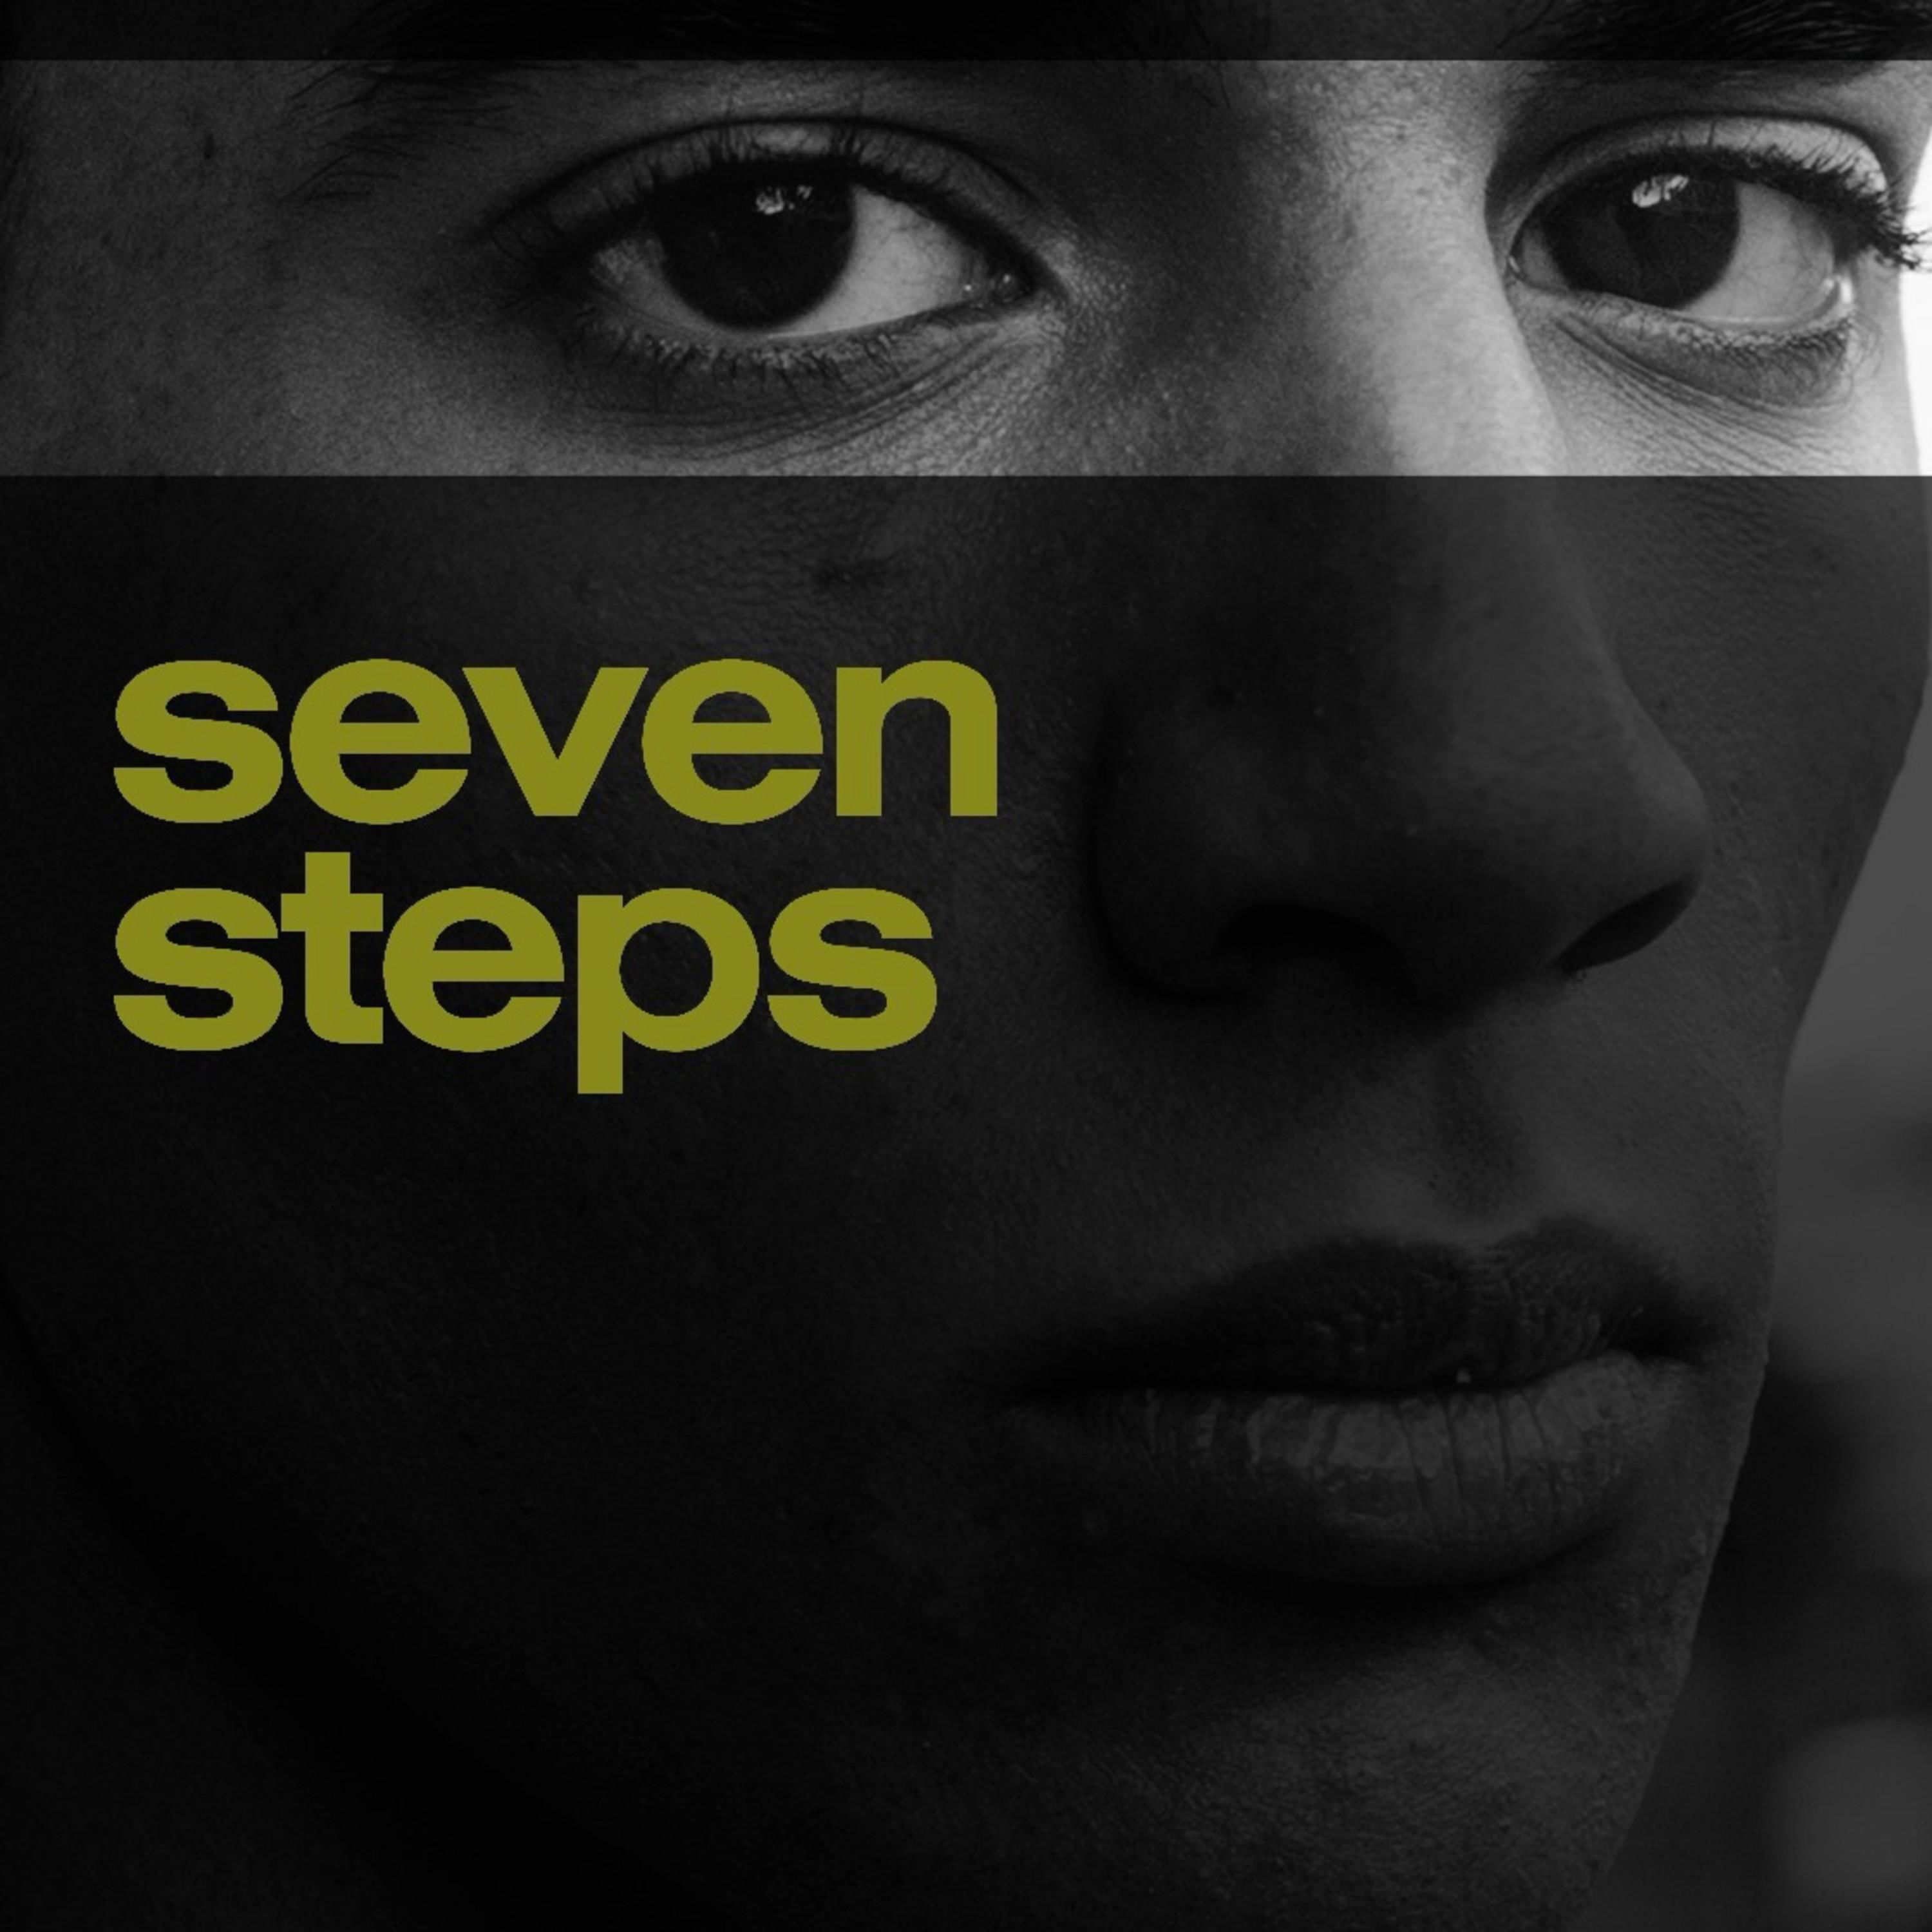 Seven steps. Seven steps Song.